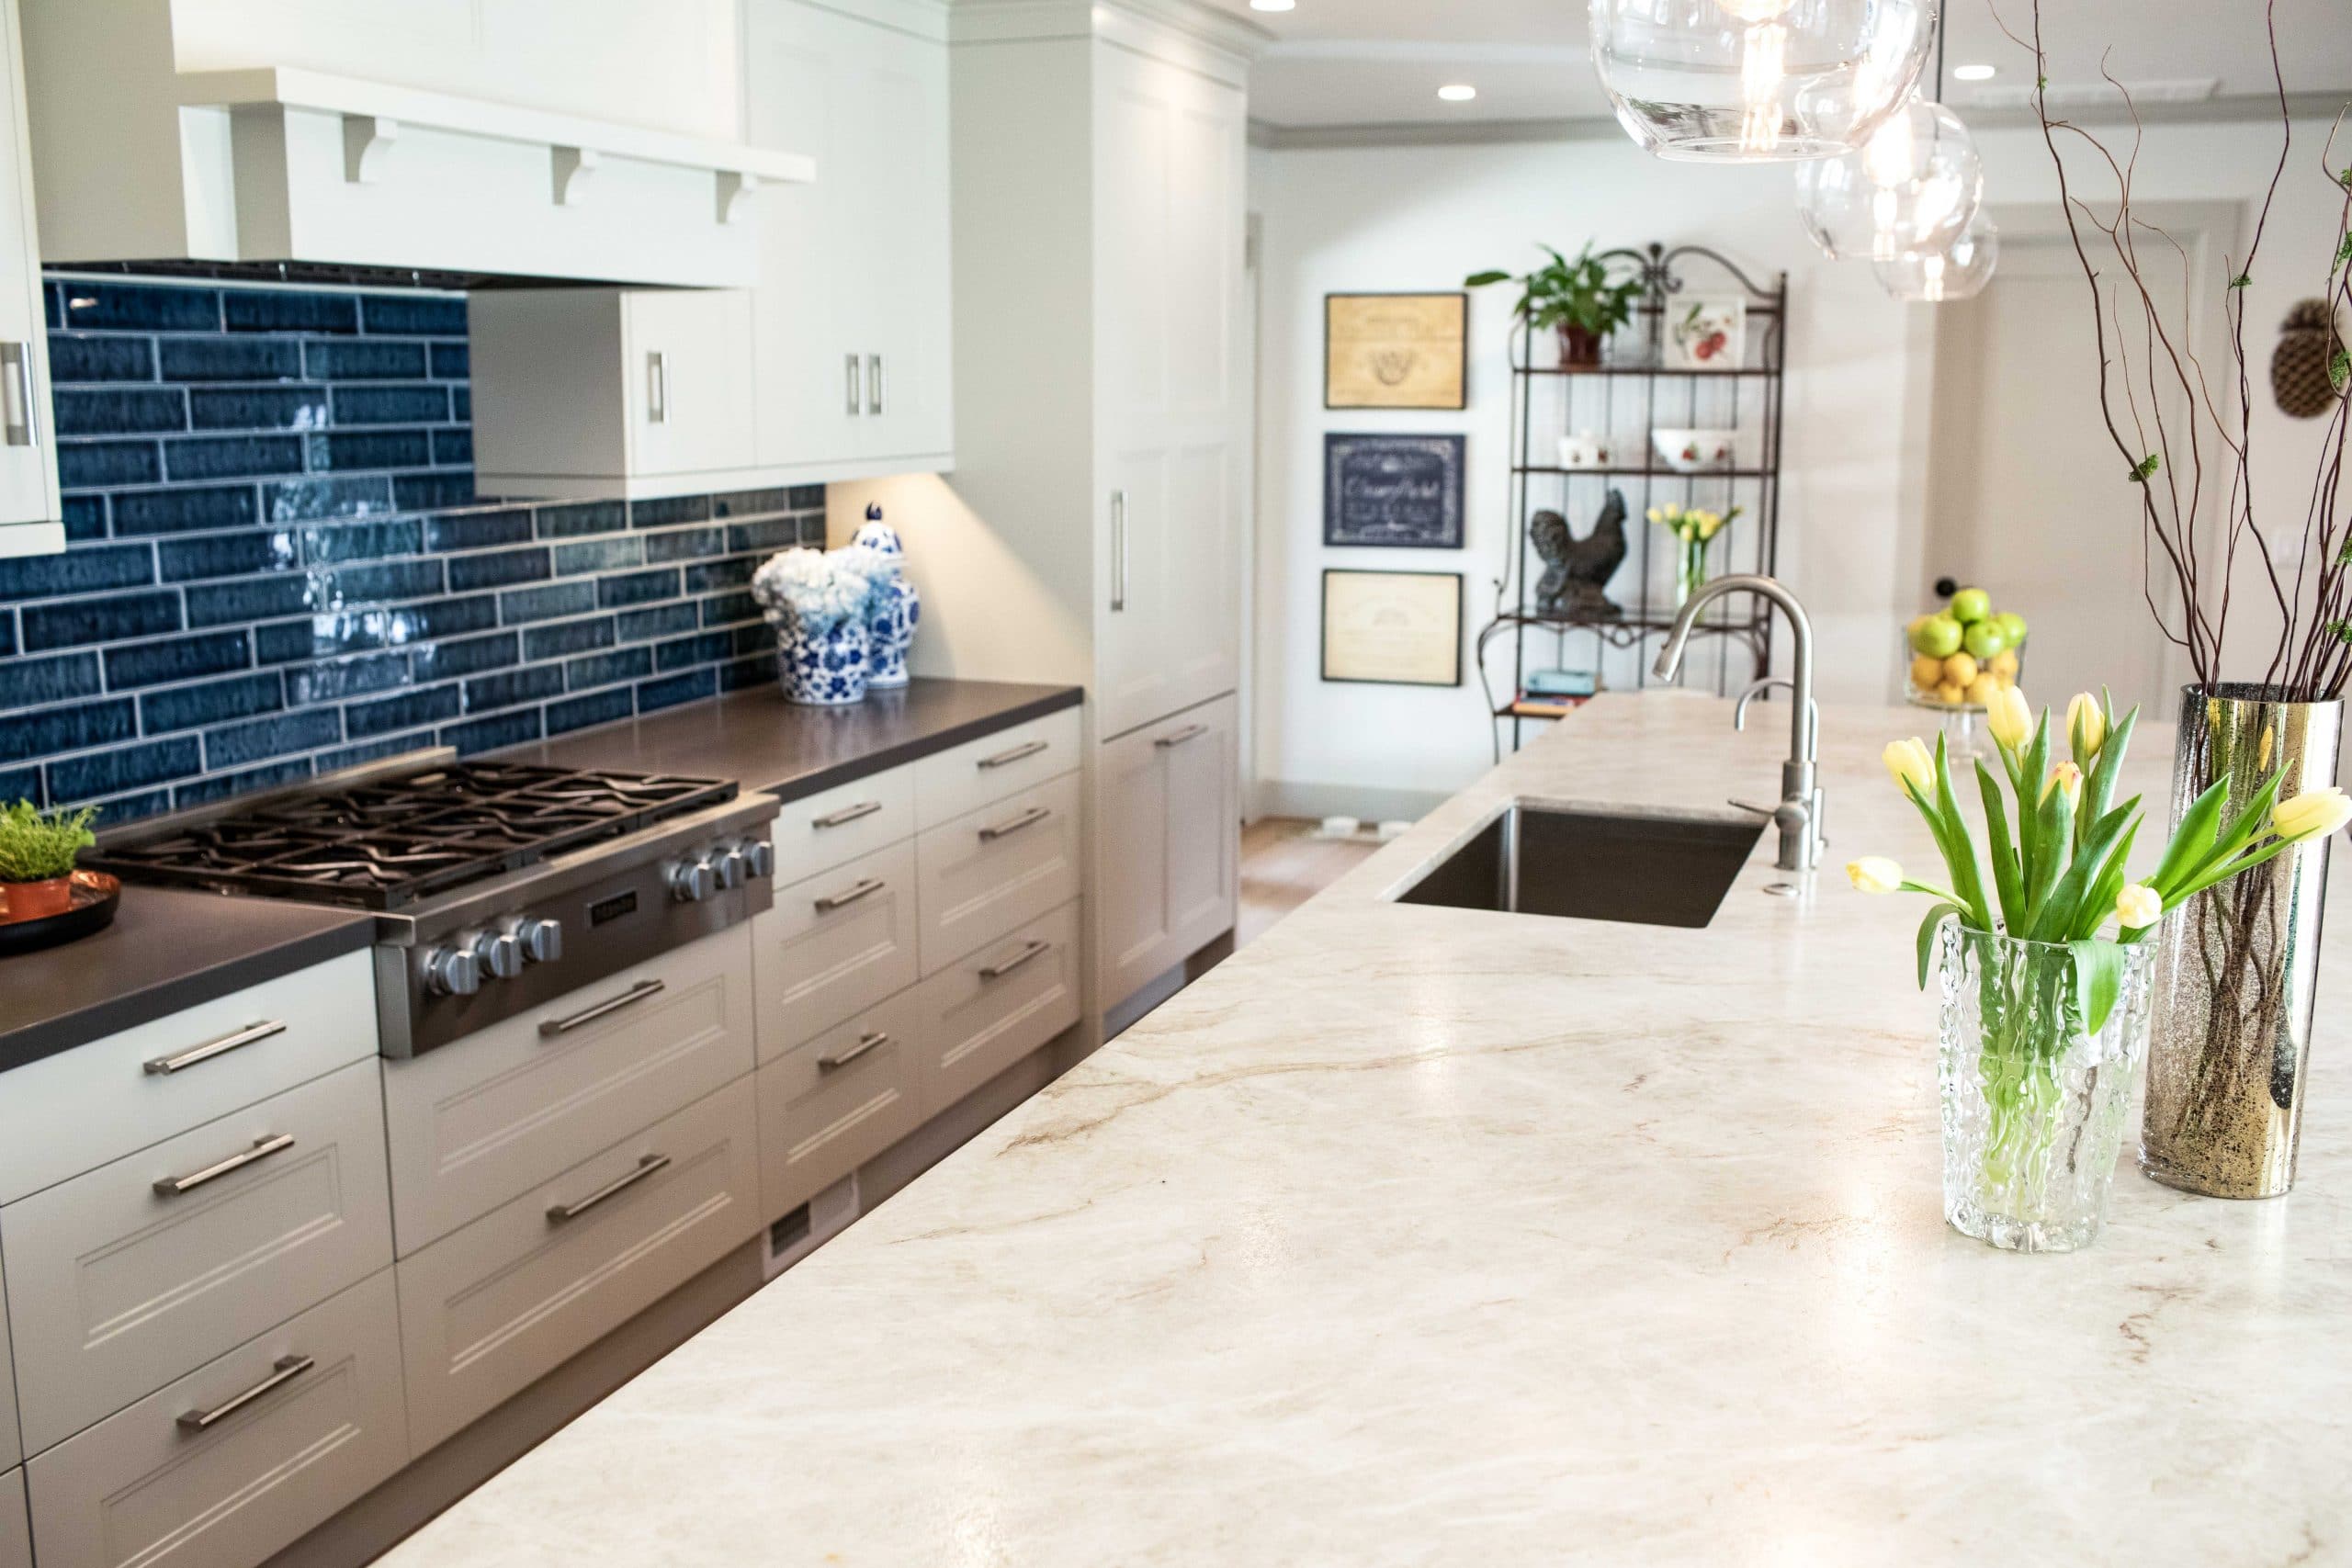 Monterey Kitchens Santa Cruz Kitchen Remodel Design Cabinetry Miele Granite Countertop Downsview 2 